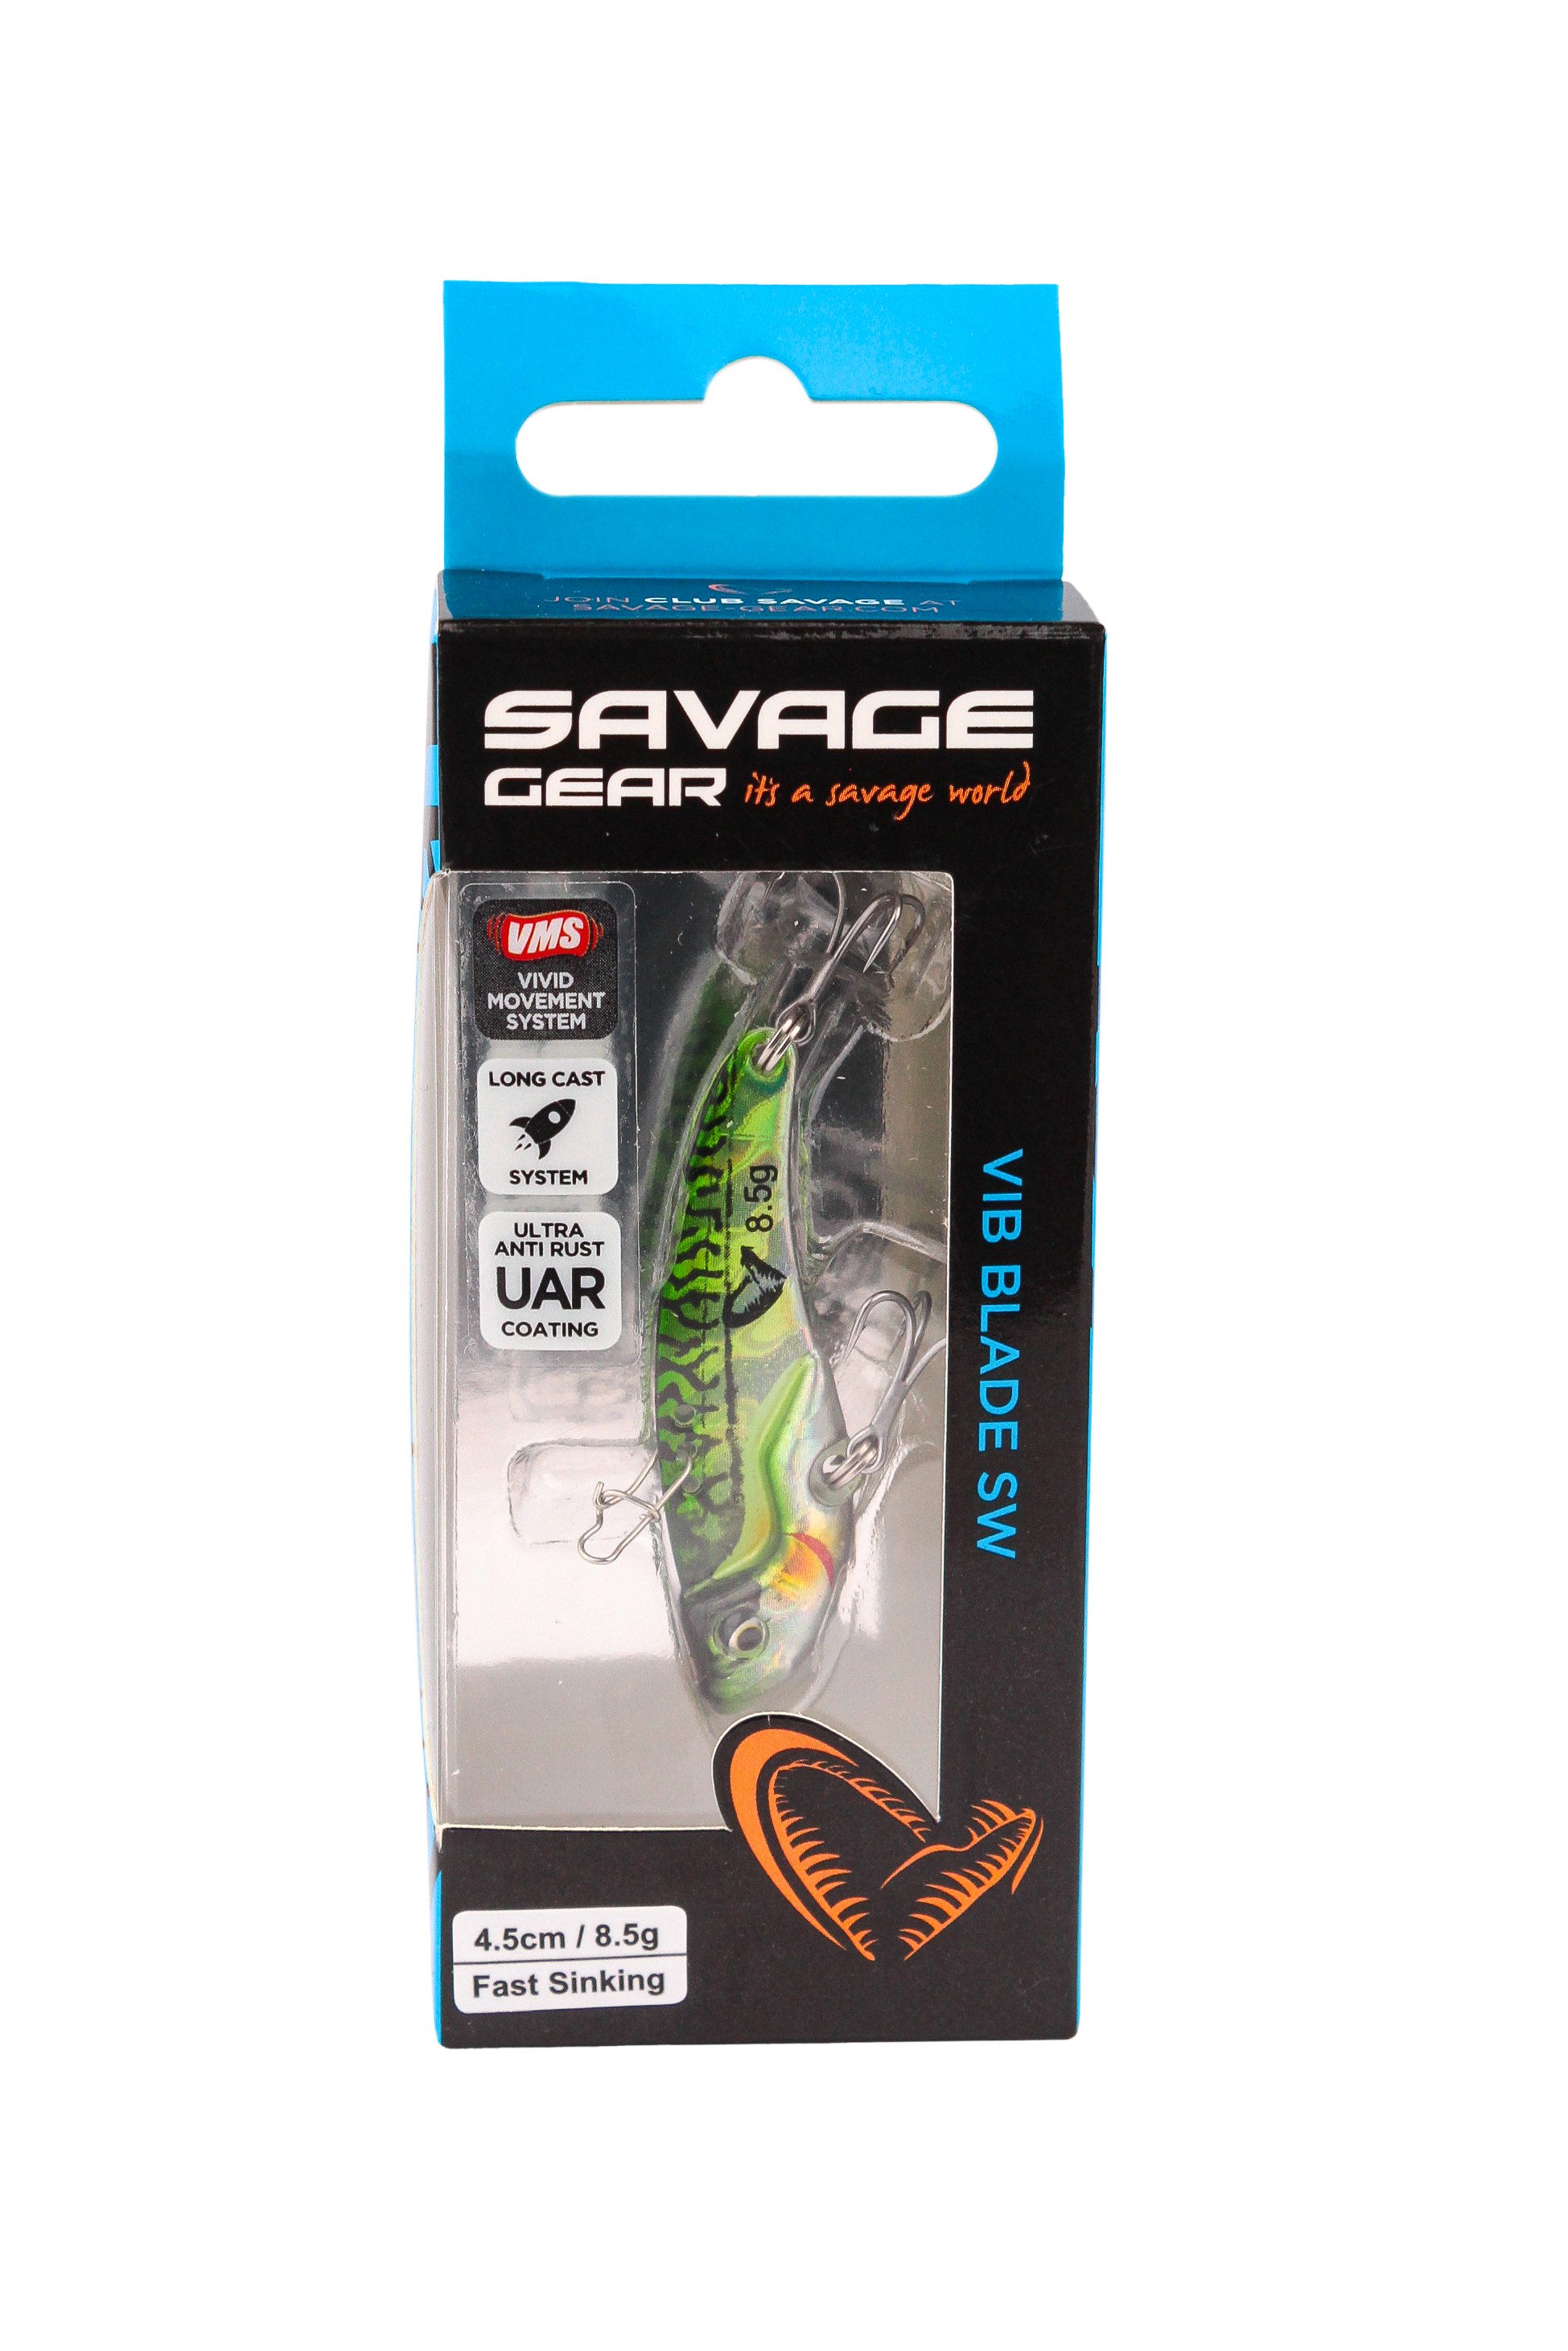 Блесна Savage Gear Vib blade SW 4,5см 8,5гр fast sinking green mackerel - фото 1